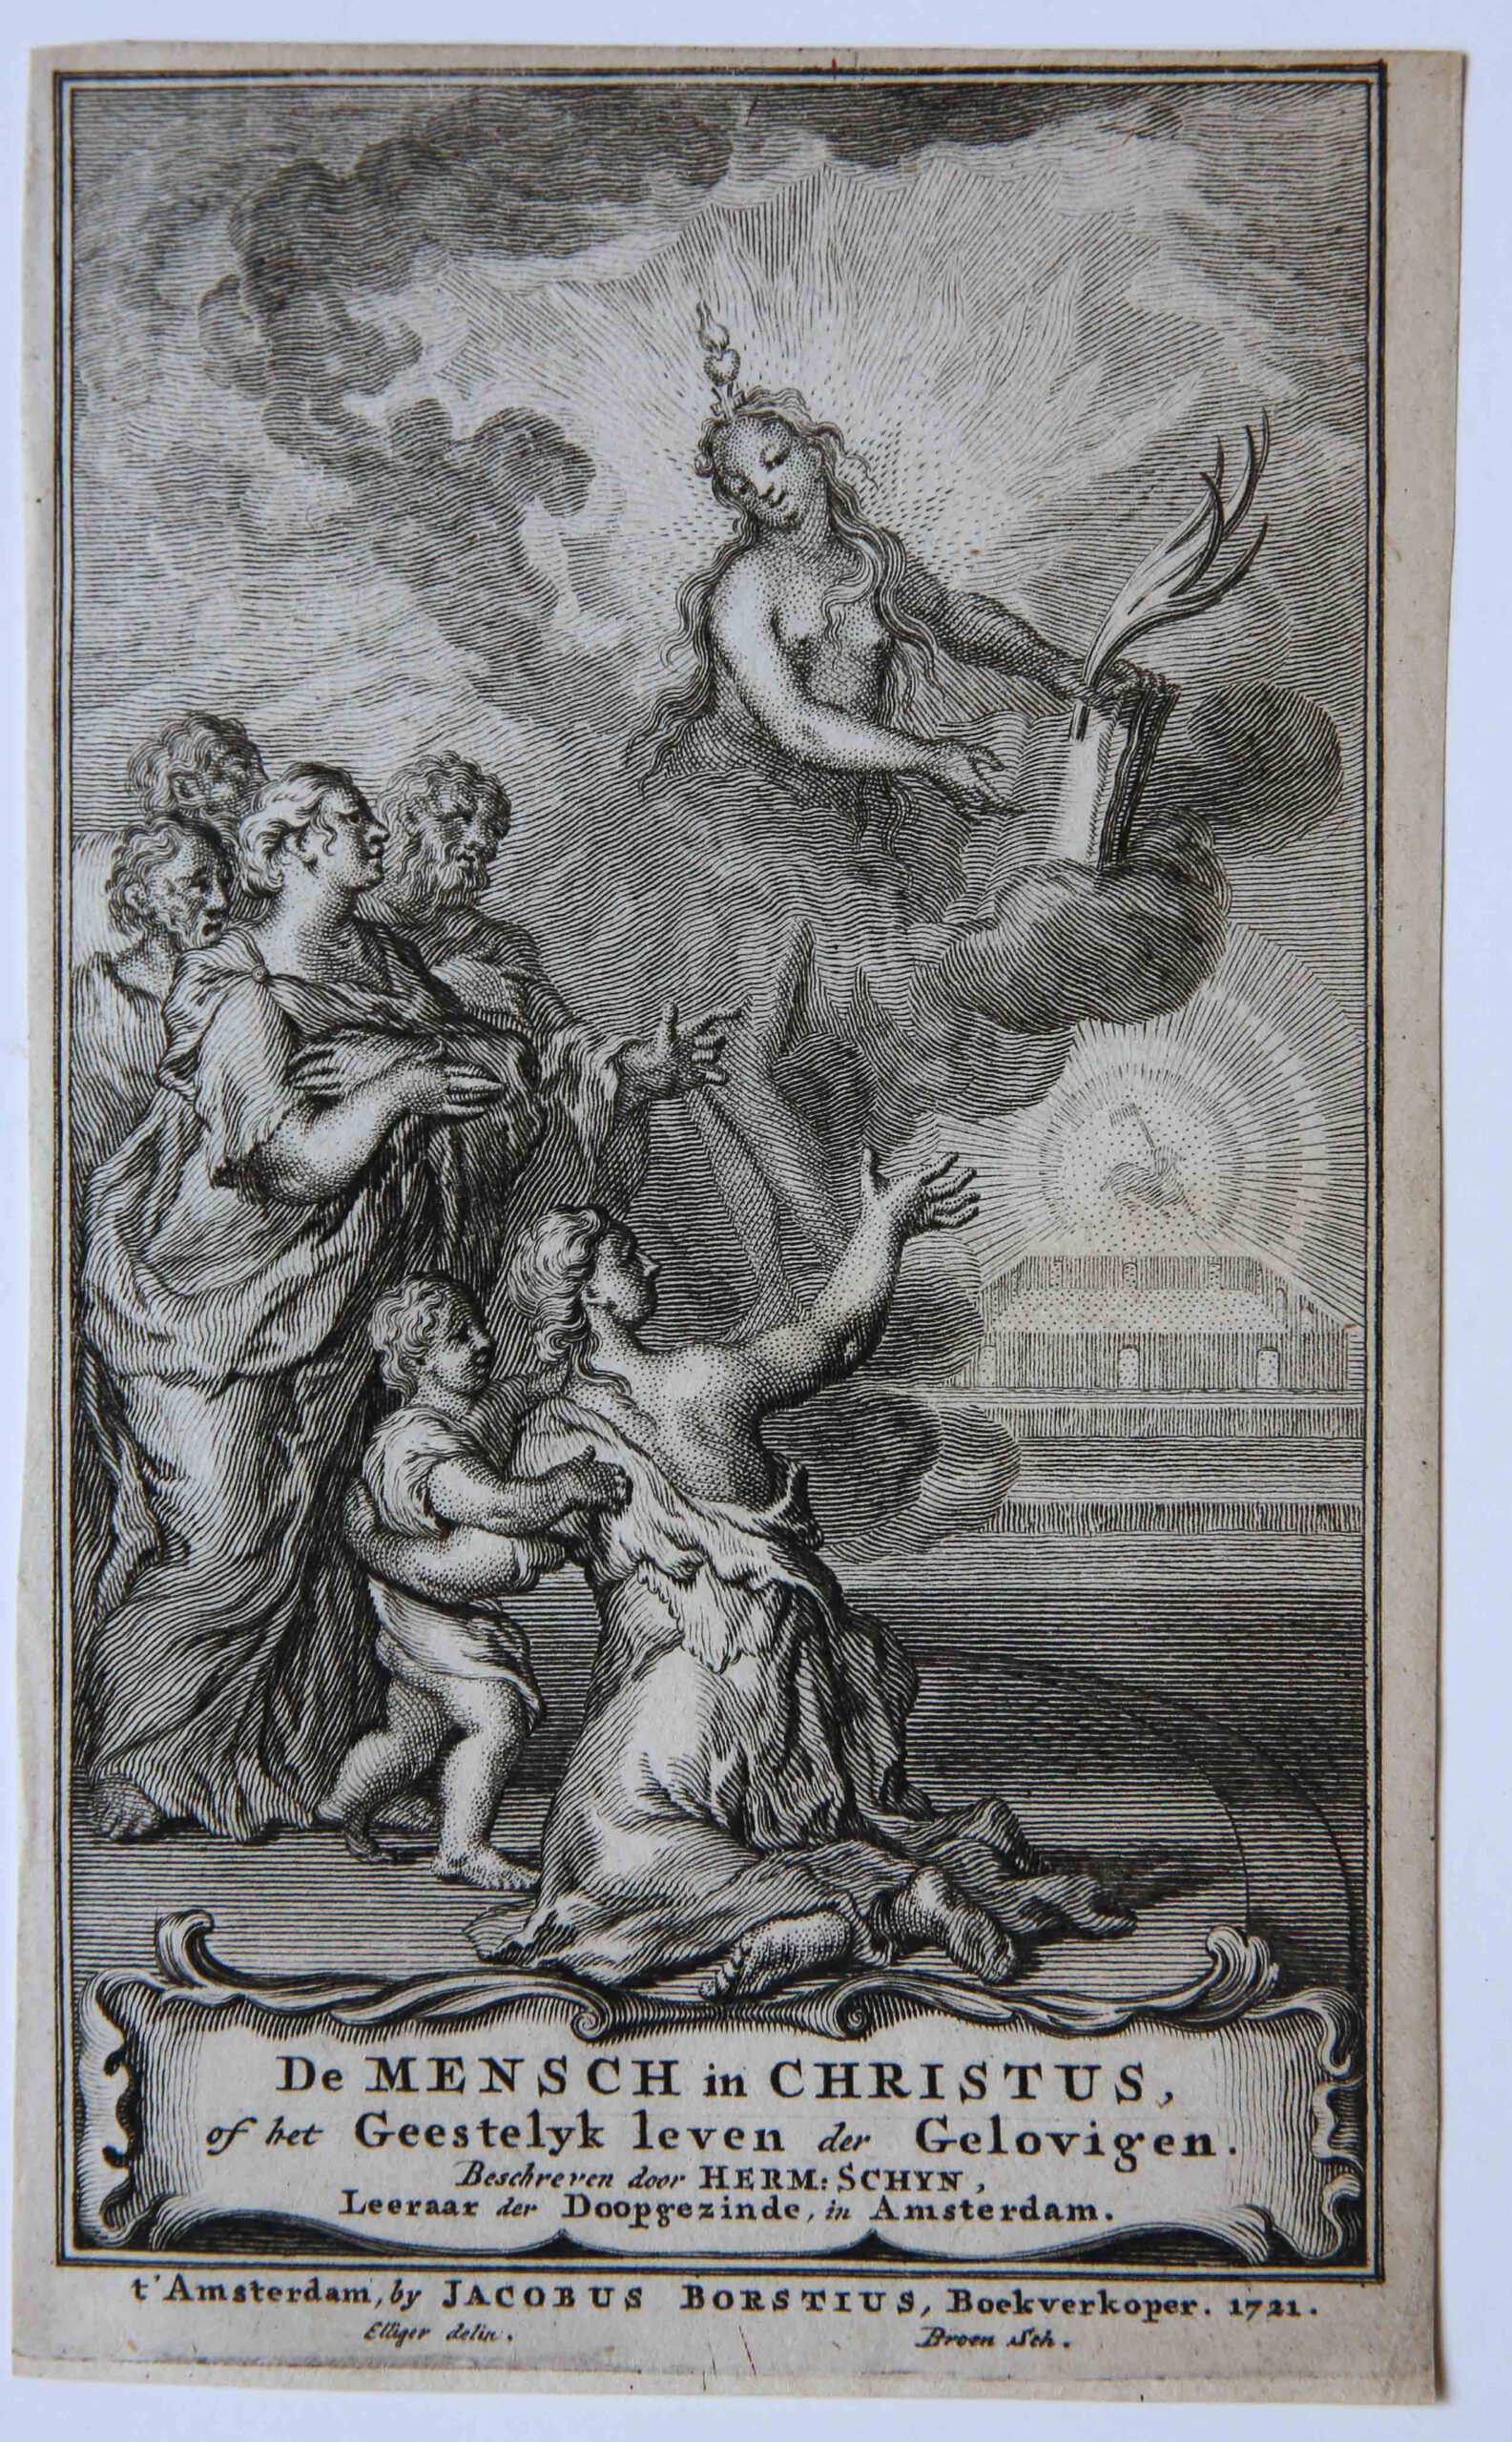 [Antique title page, 1721] De mensch in Christus of het geestelyk leven der gelovigen, published 1721, 1 p.